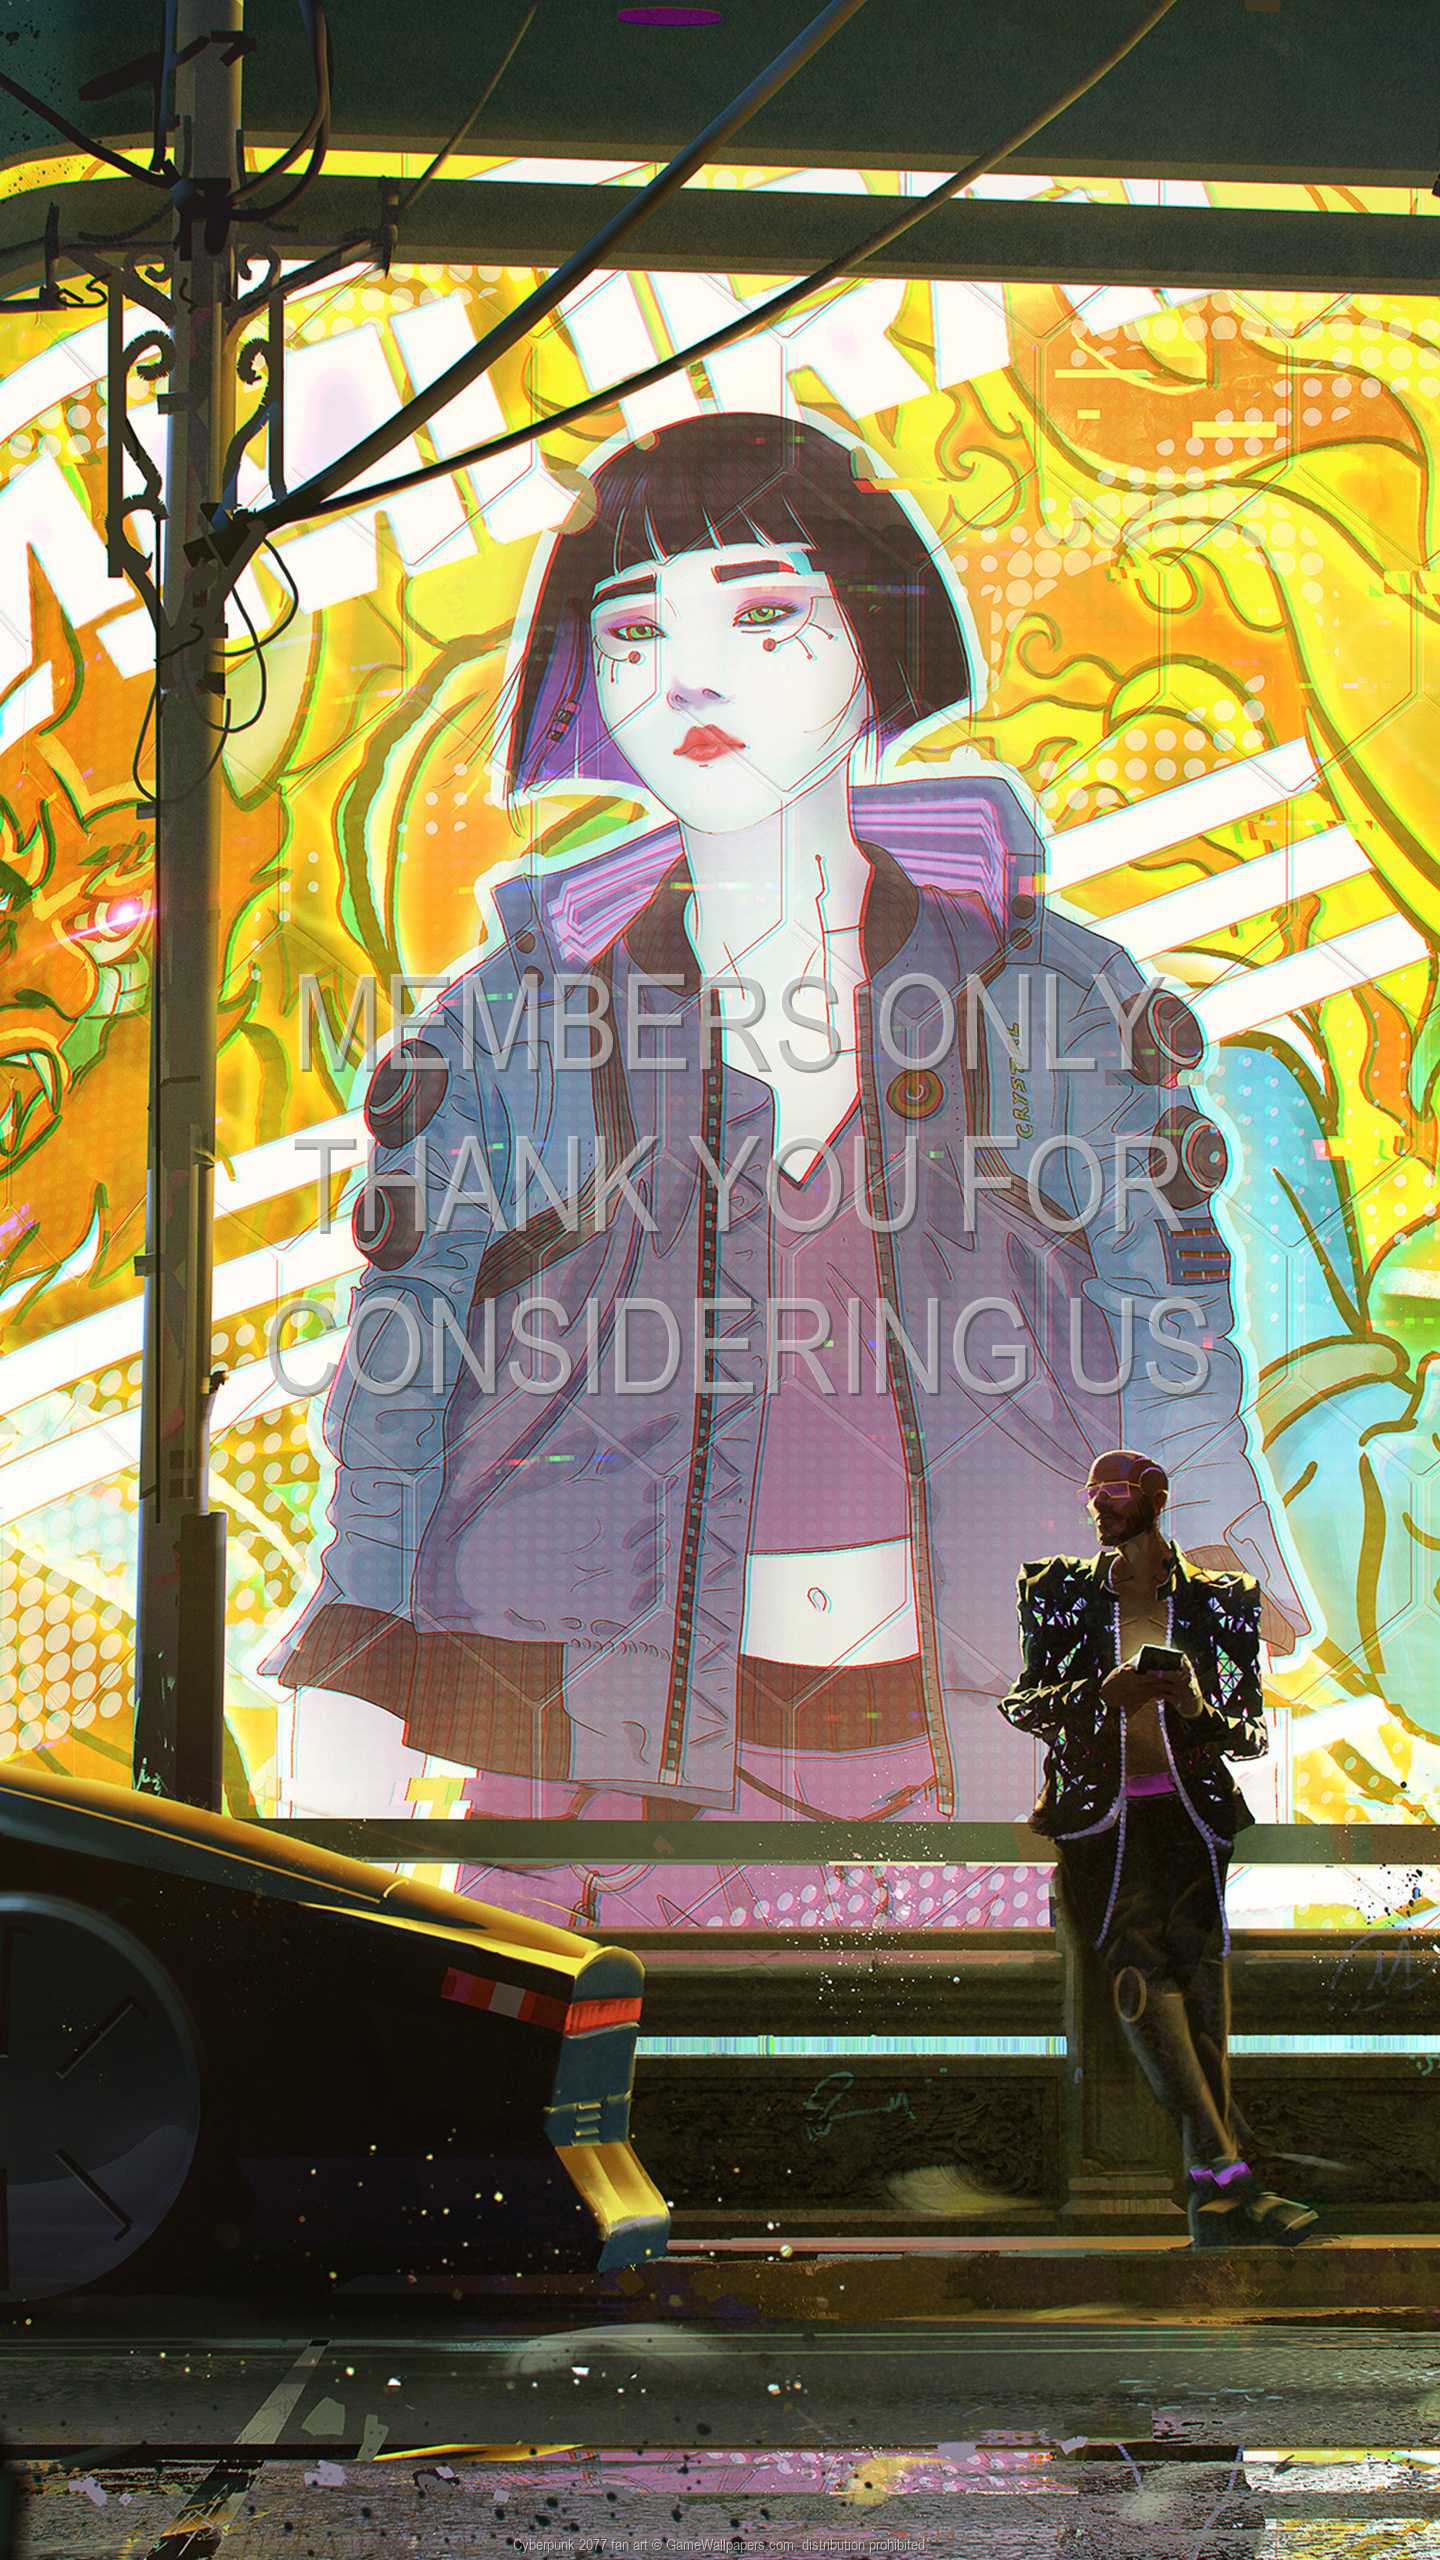 Cyberpunk 2077 fan art 1440p%20Vertical Mobile wallpaper or background 05